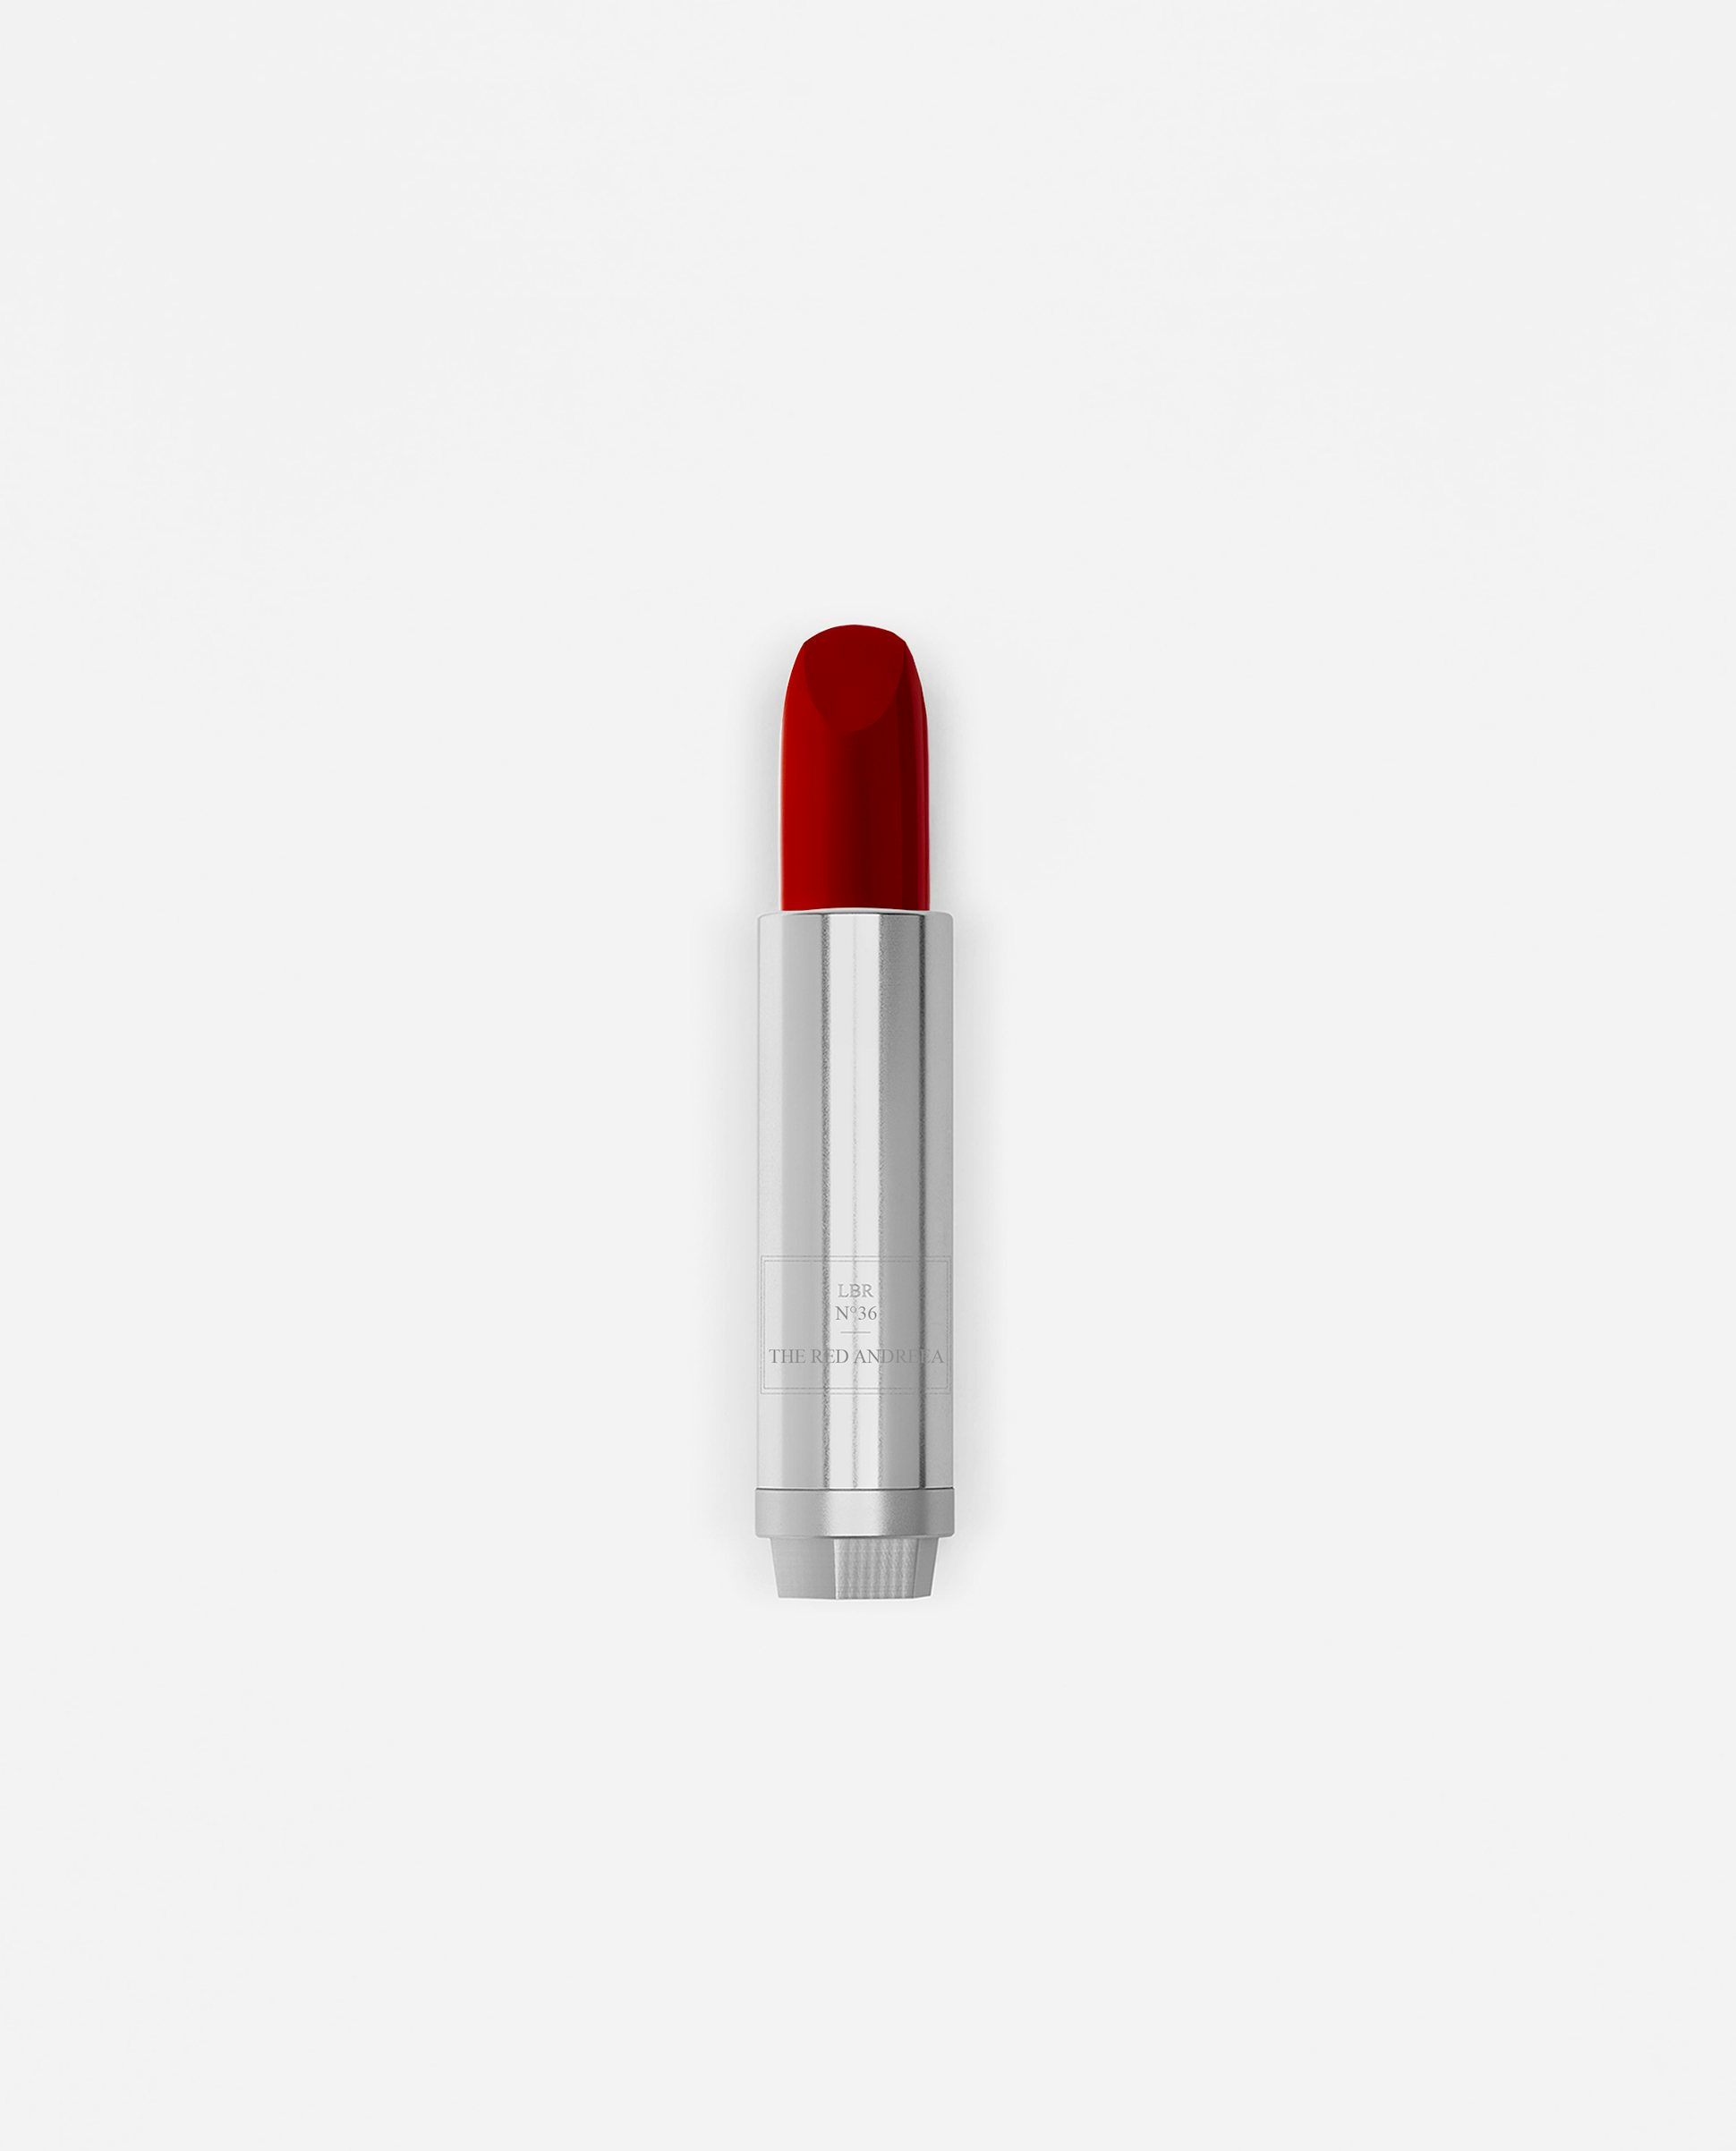 La bouche rouge The Red Andreea lipstick in metal refill